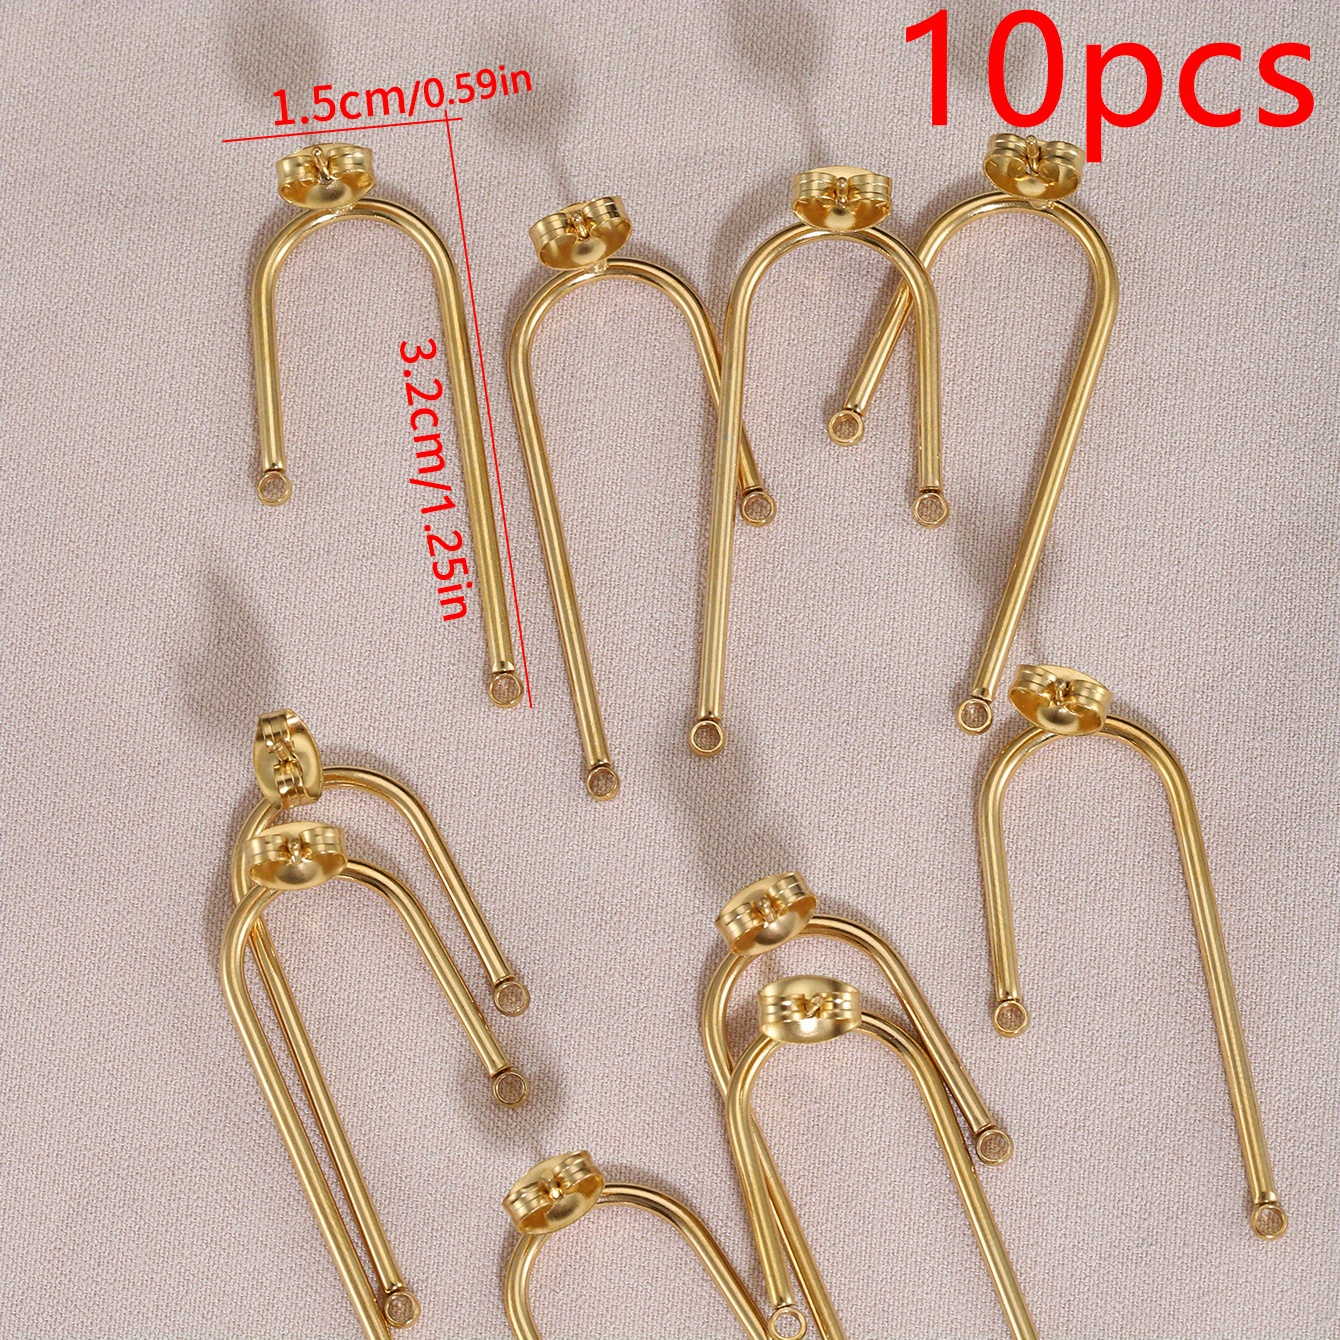 10pcs Stainless Steel Ear Studs Earring Post Base Pins With Ear Backs  Earplug For Earrings DIY Jewelry Making Components